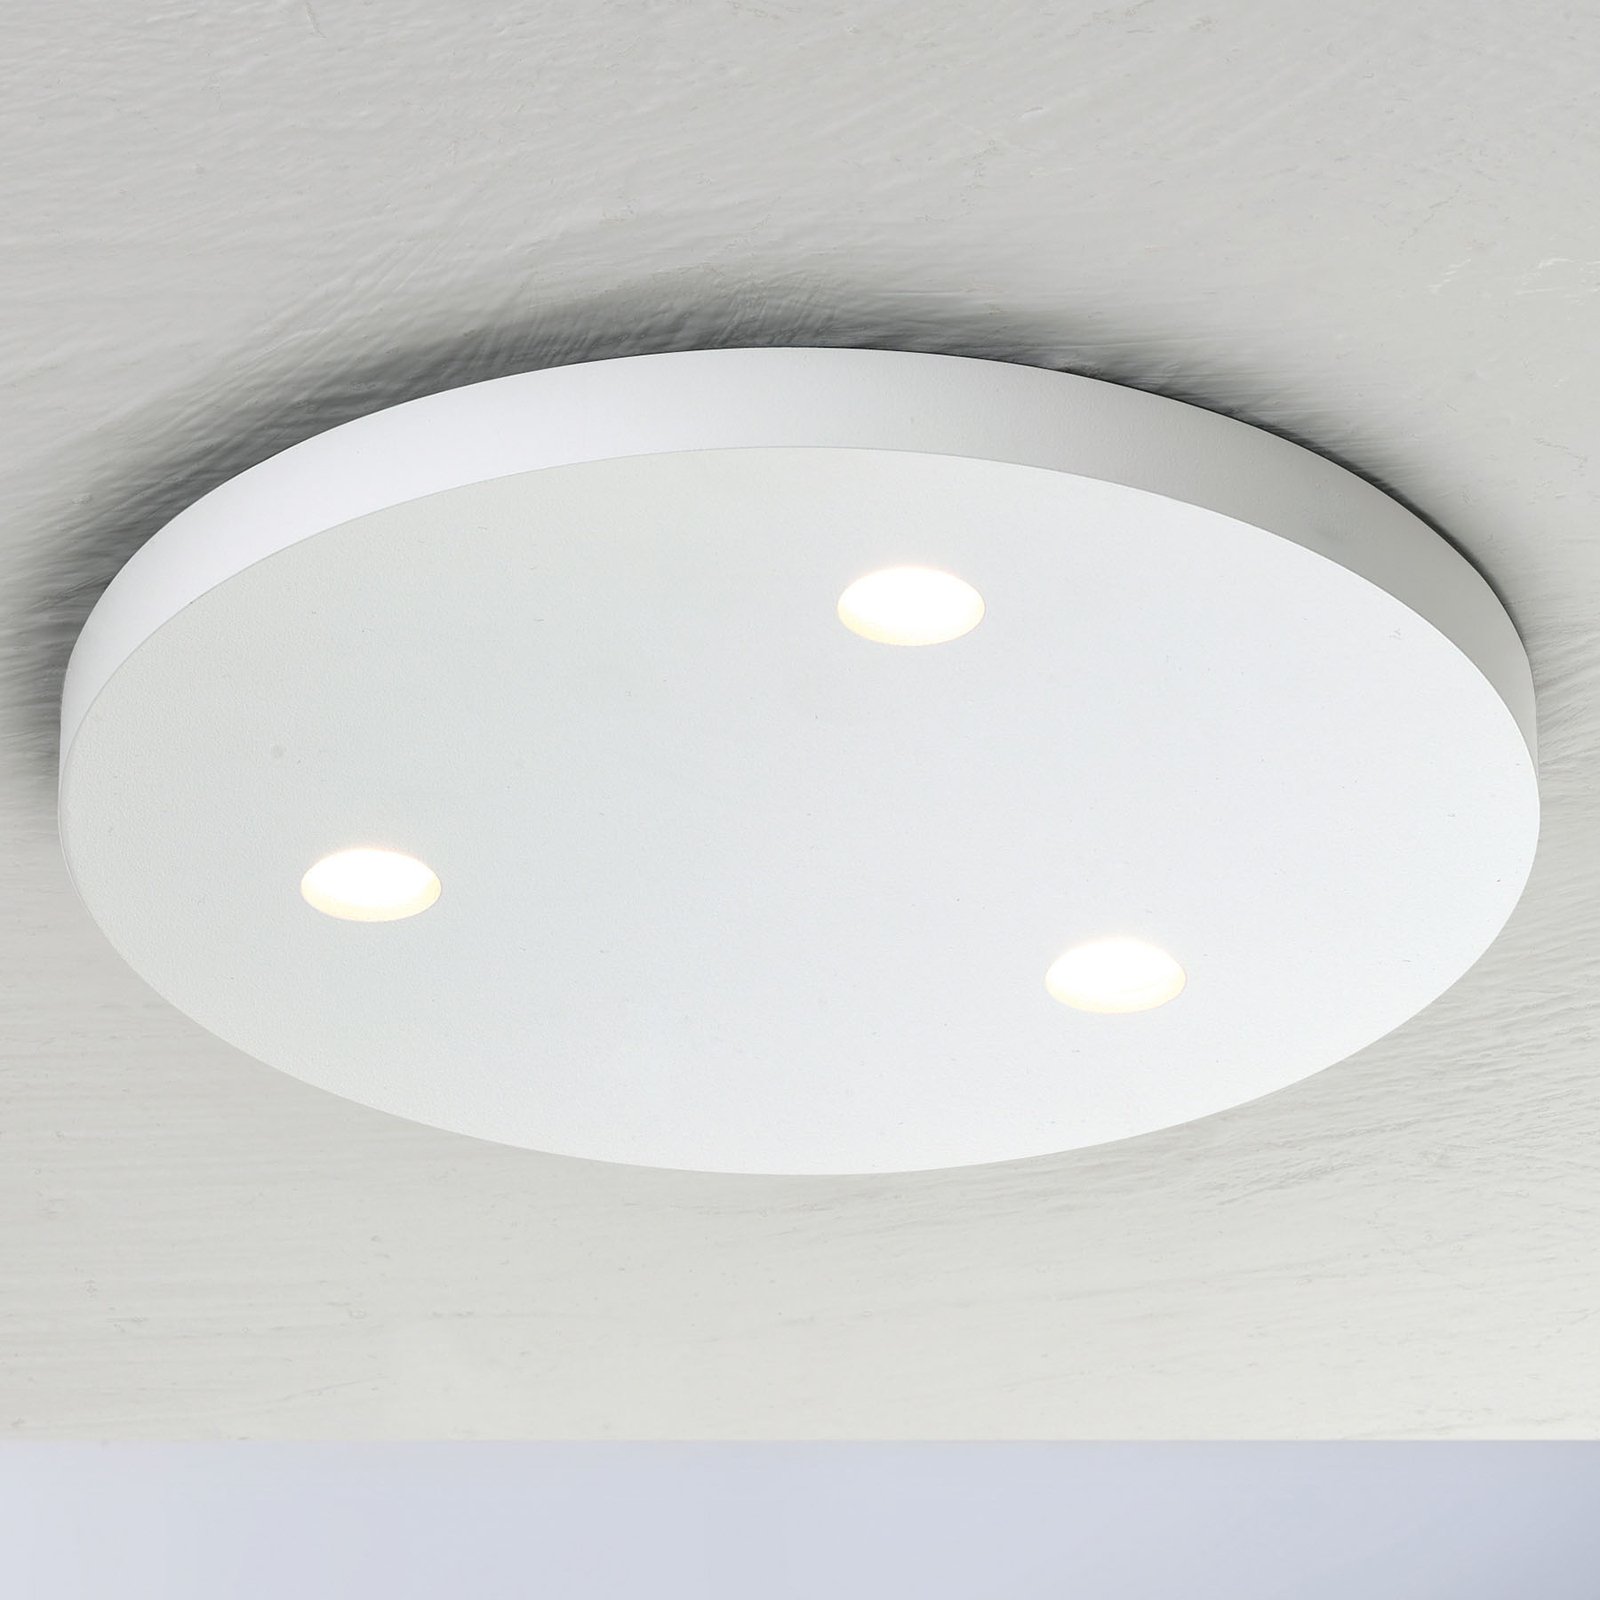 Bopp Close LED ceiling lamp 3-bulb round white